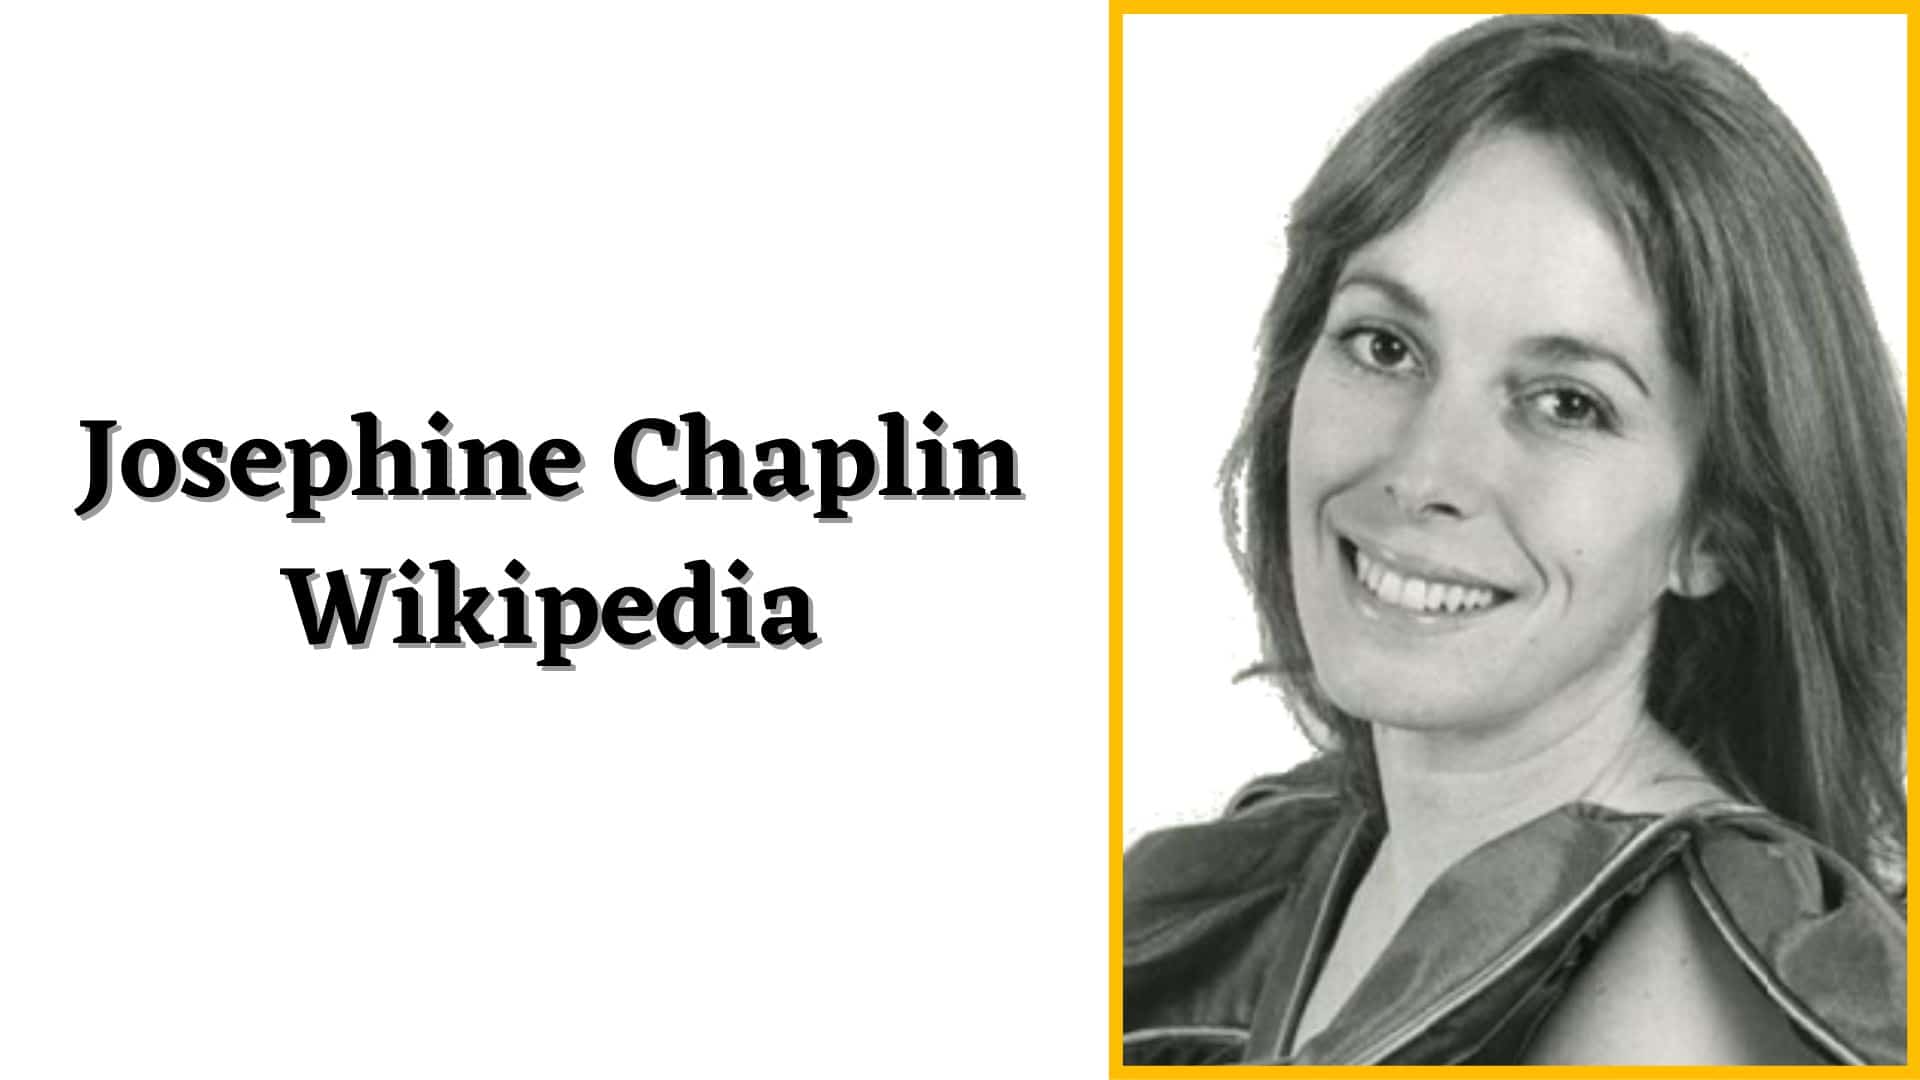 Josephine Chaplin Wikipedia, Net Worth, Parents, Wedding, Instagram, Mother, House, CEO